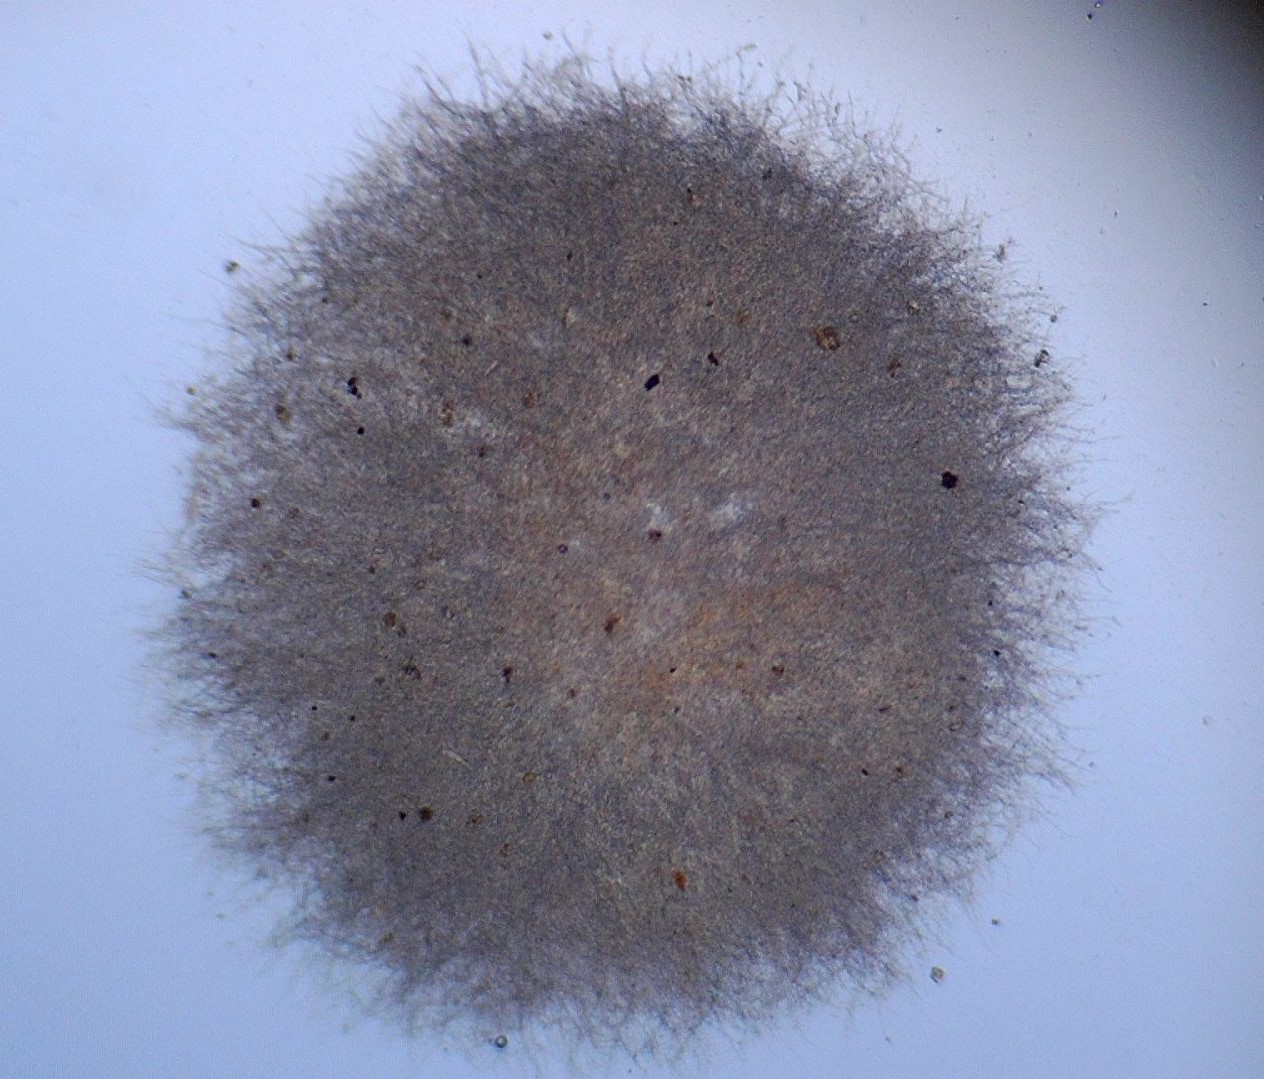 Figure 1. Aspergillus tabacinus pellet